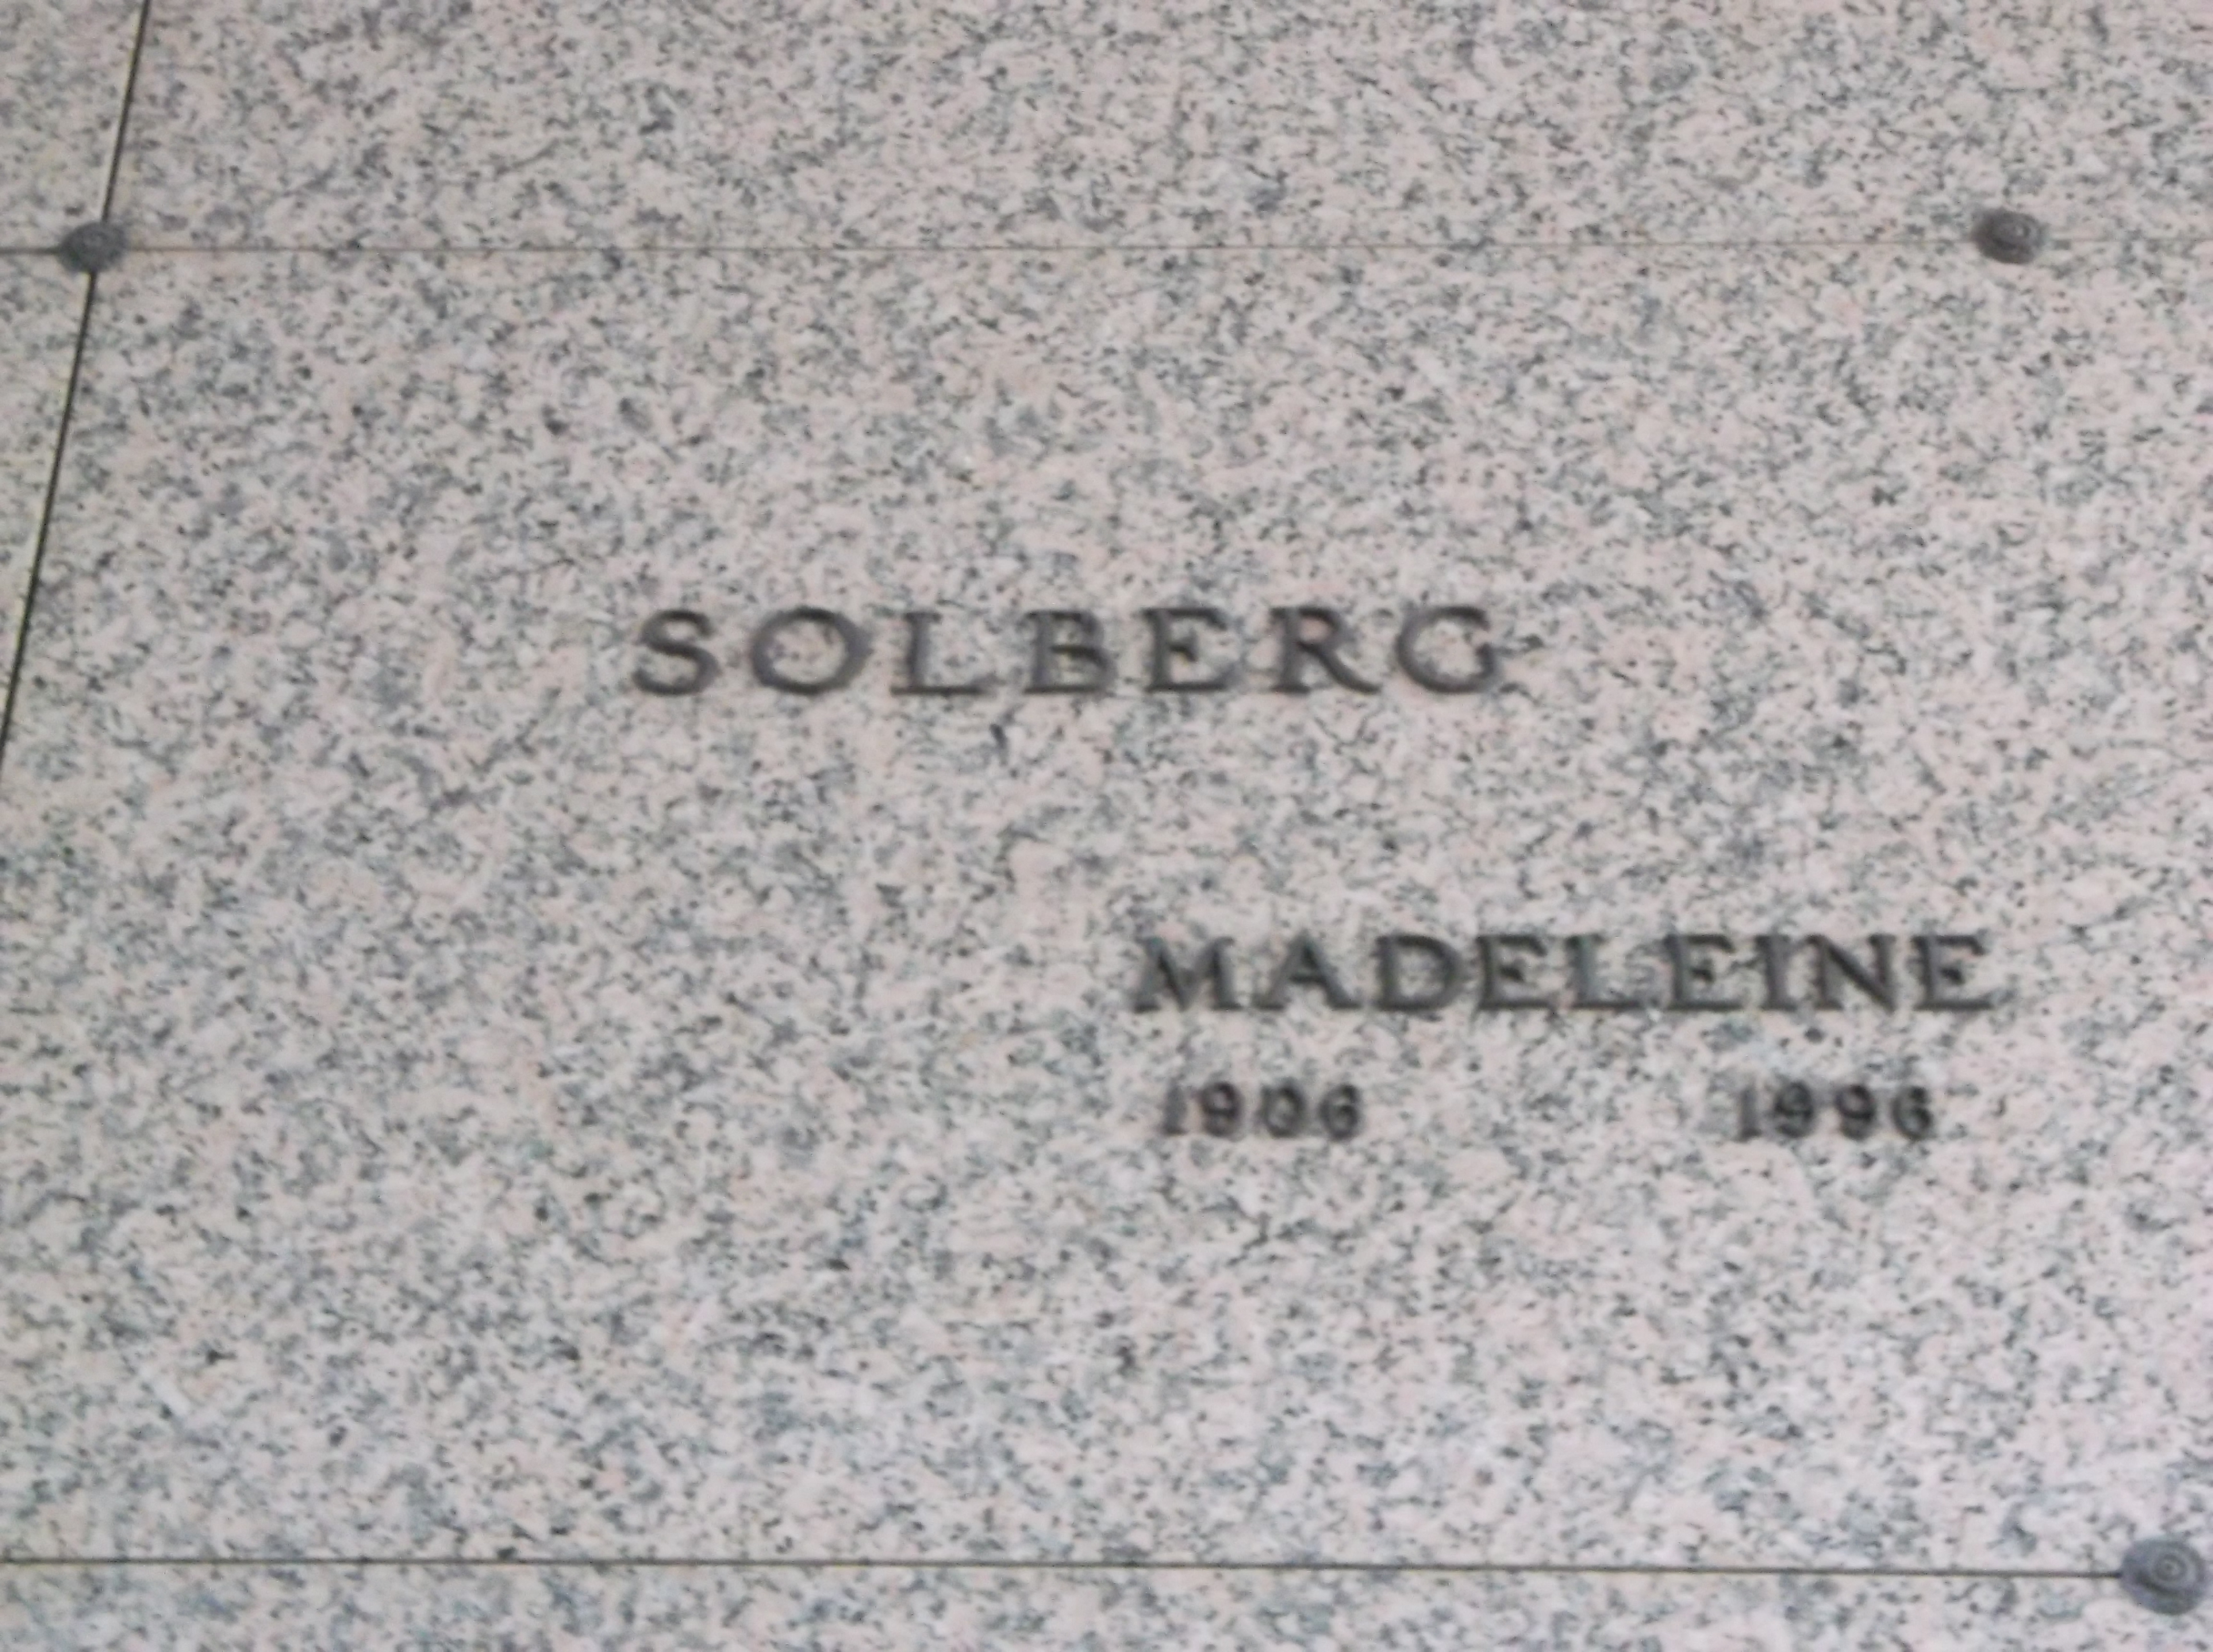 Madeleine Solberg